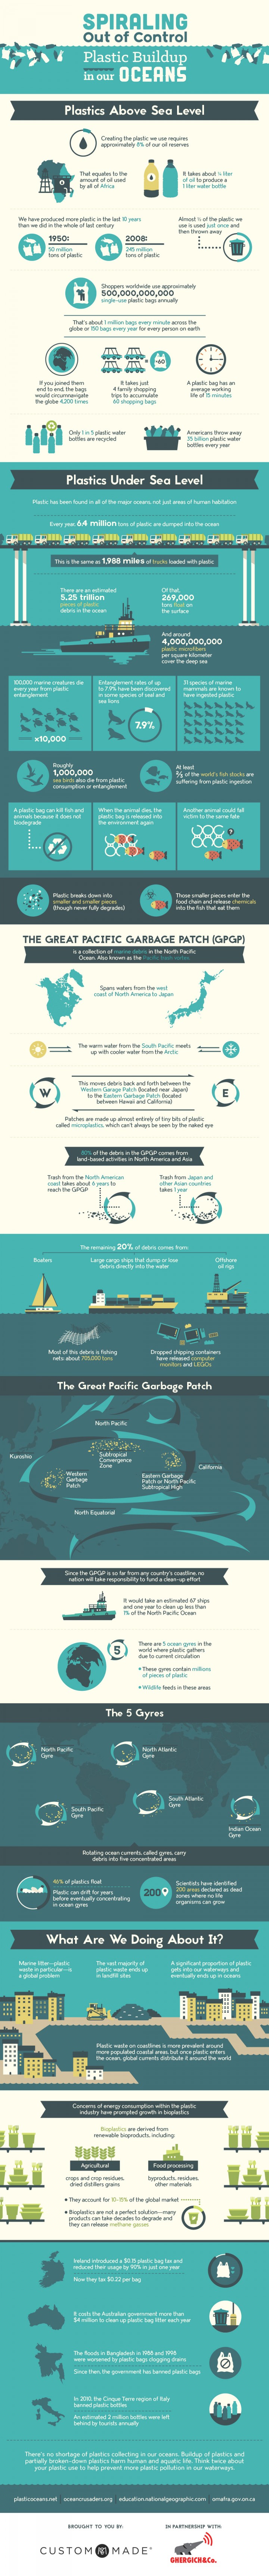  Plastic Buildup in Our Oceans